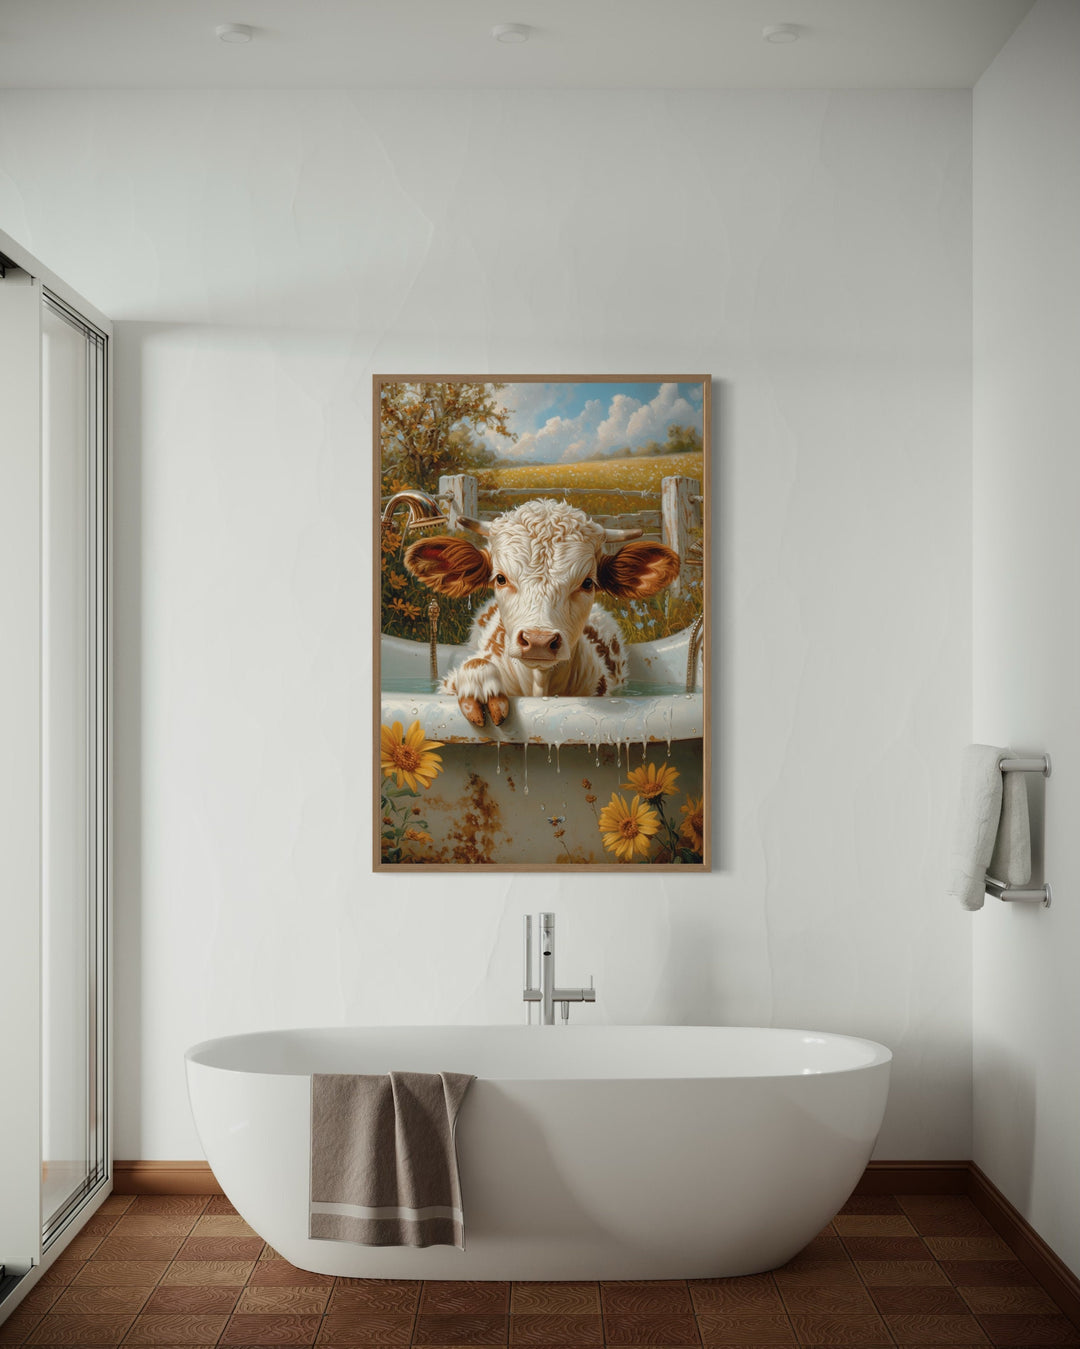 Baby Highland Cow Calf In The Bathtub Framed Canvas Wall Art above bathtub